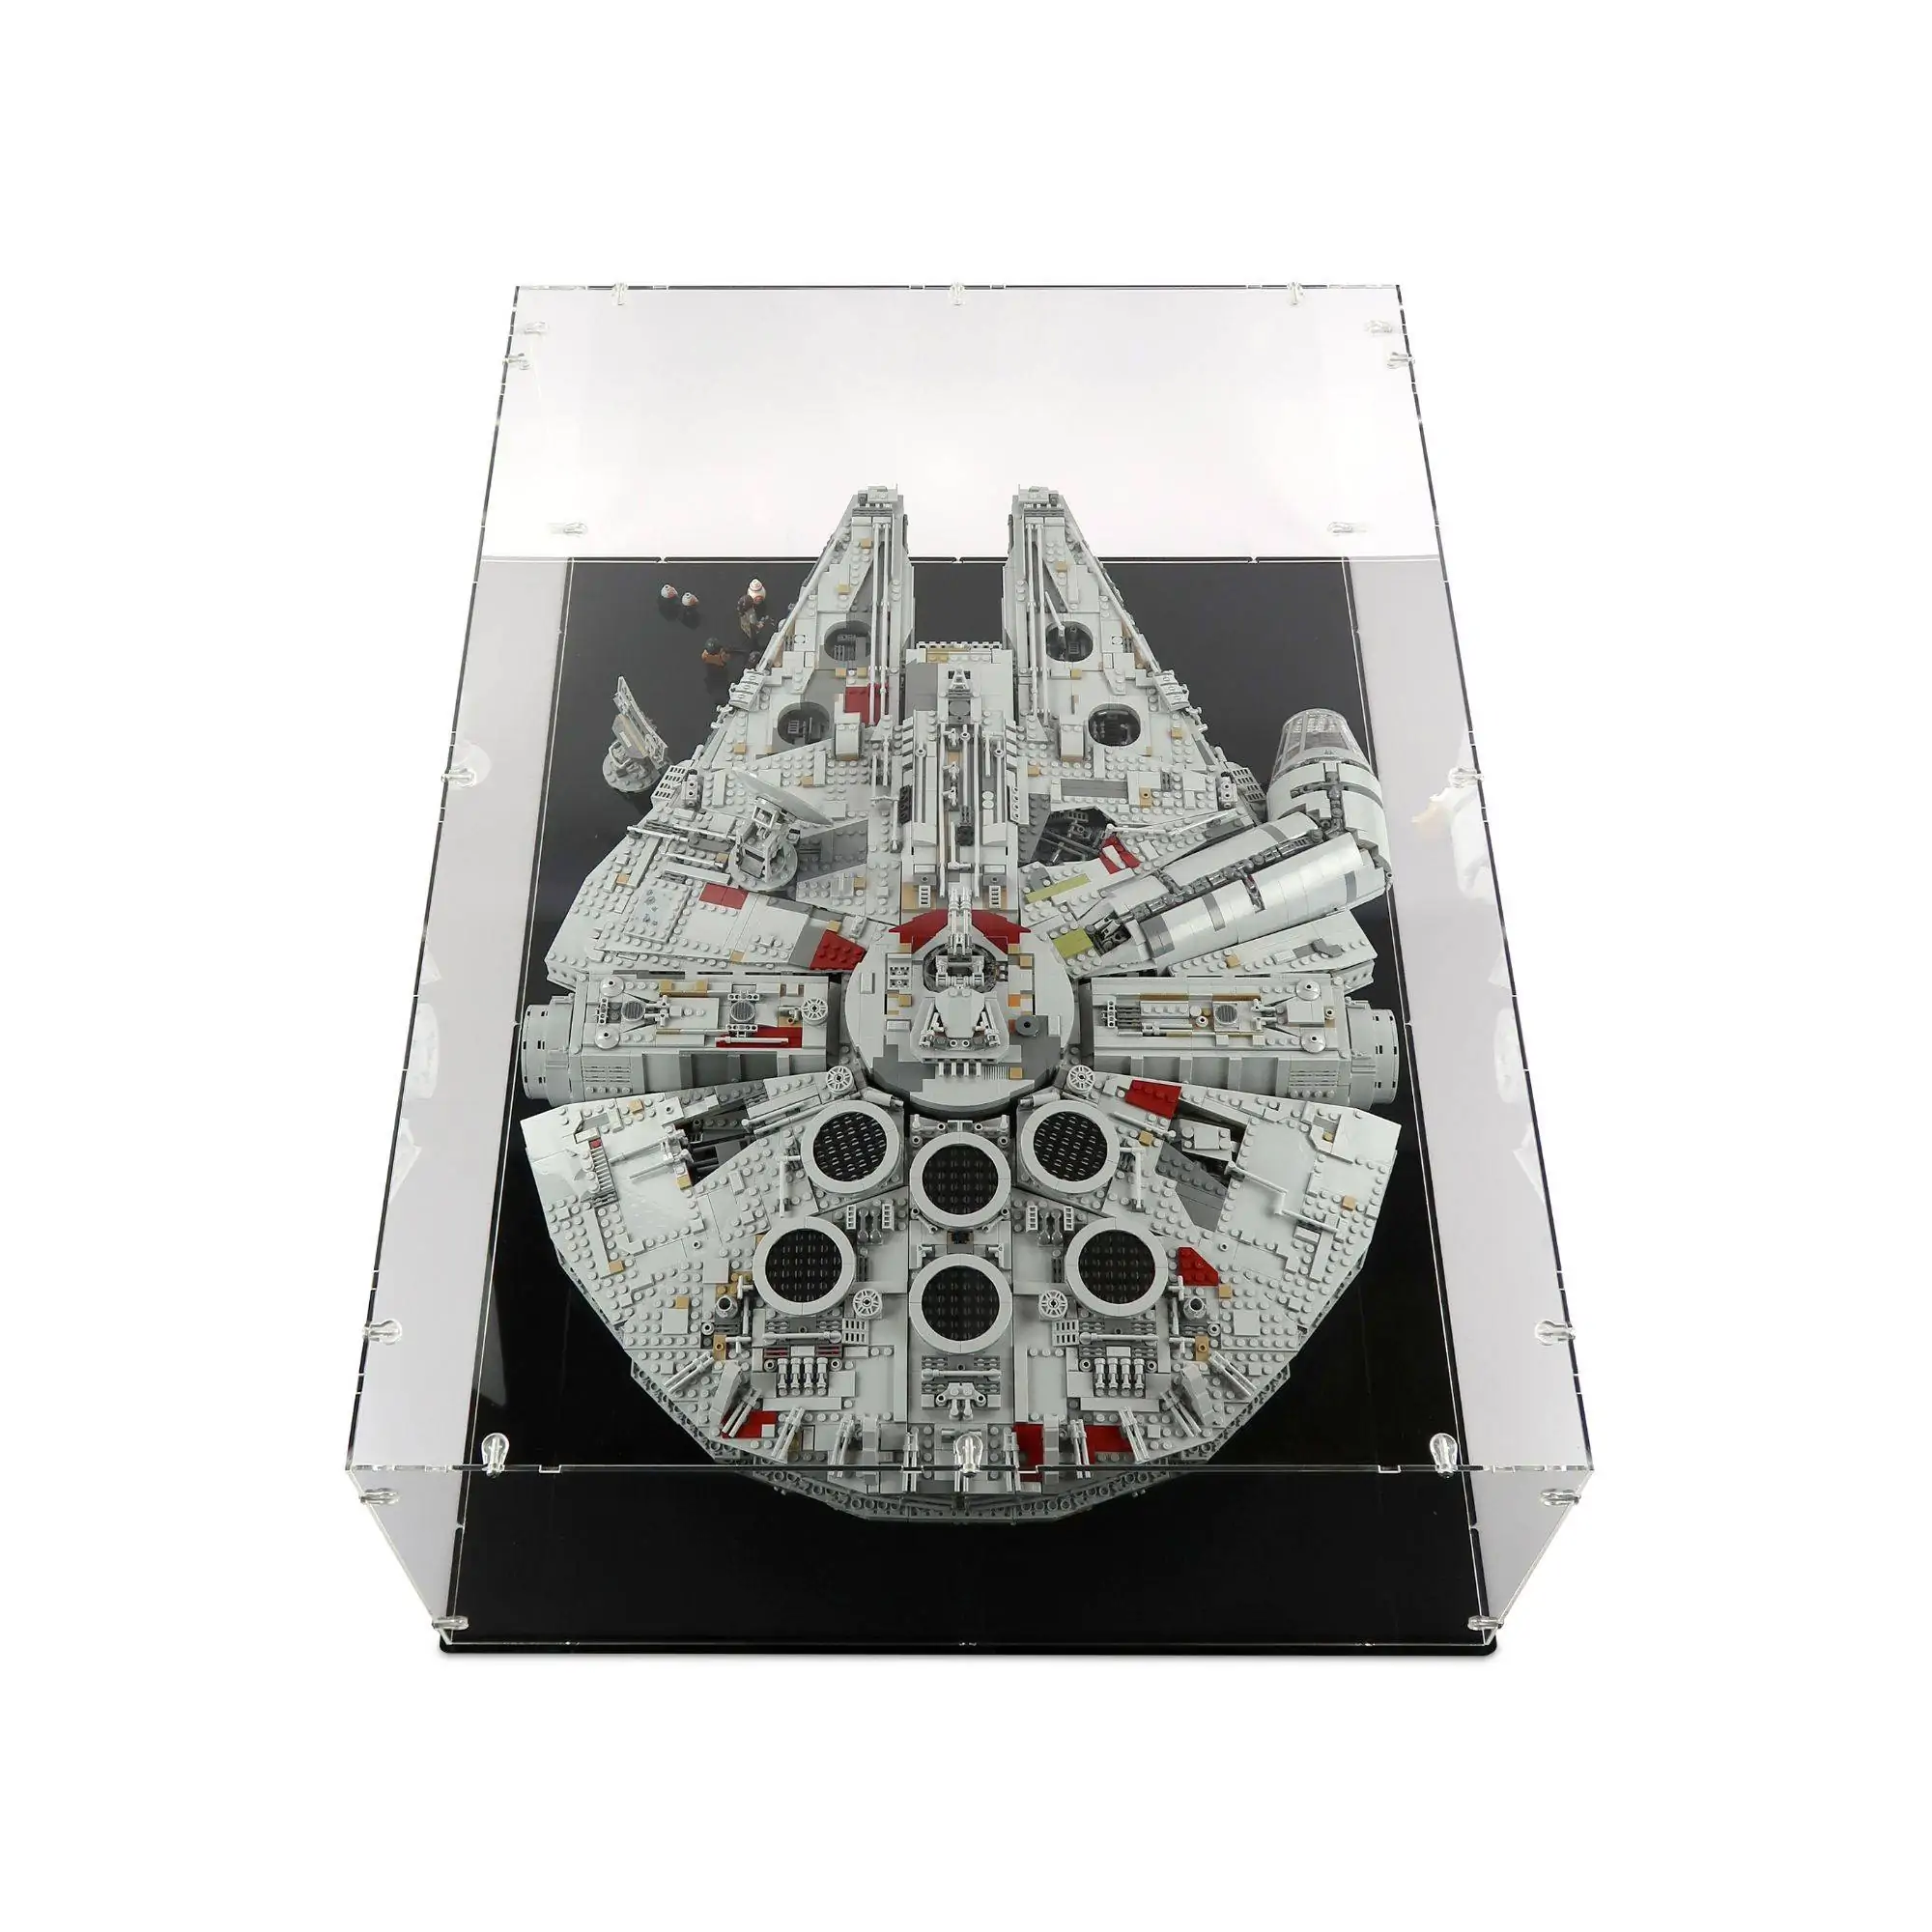 Display Case for LEGO® Star Wars™ UCS Millennium Falcon™  75192 & 10179